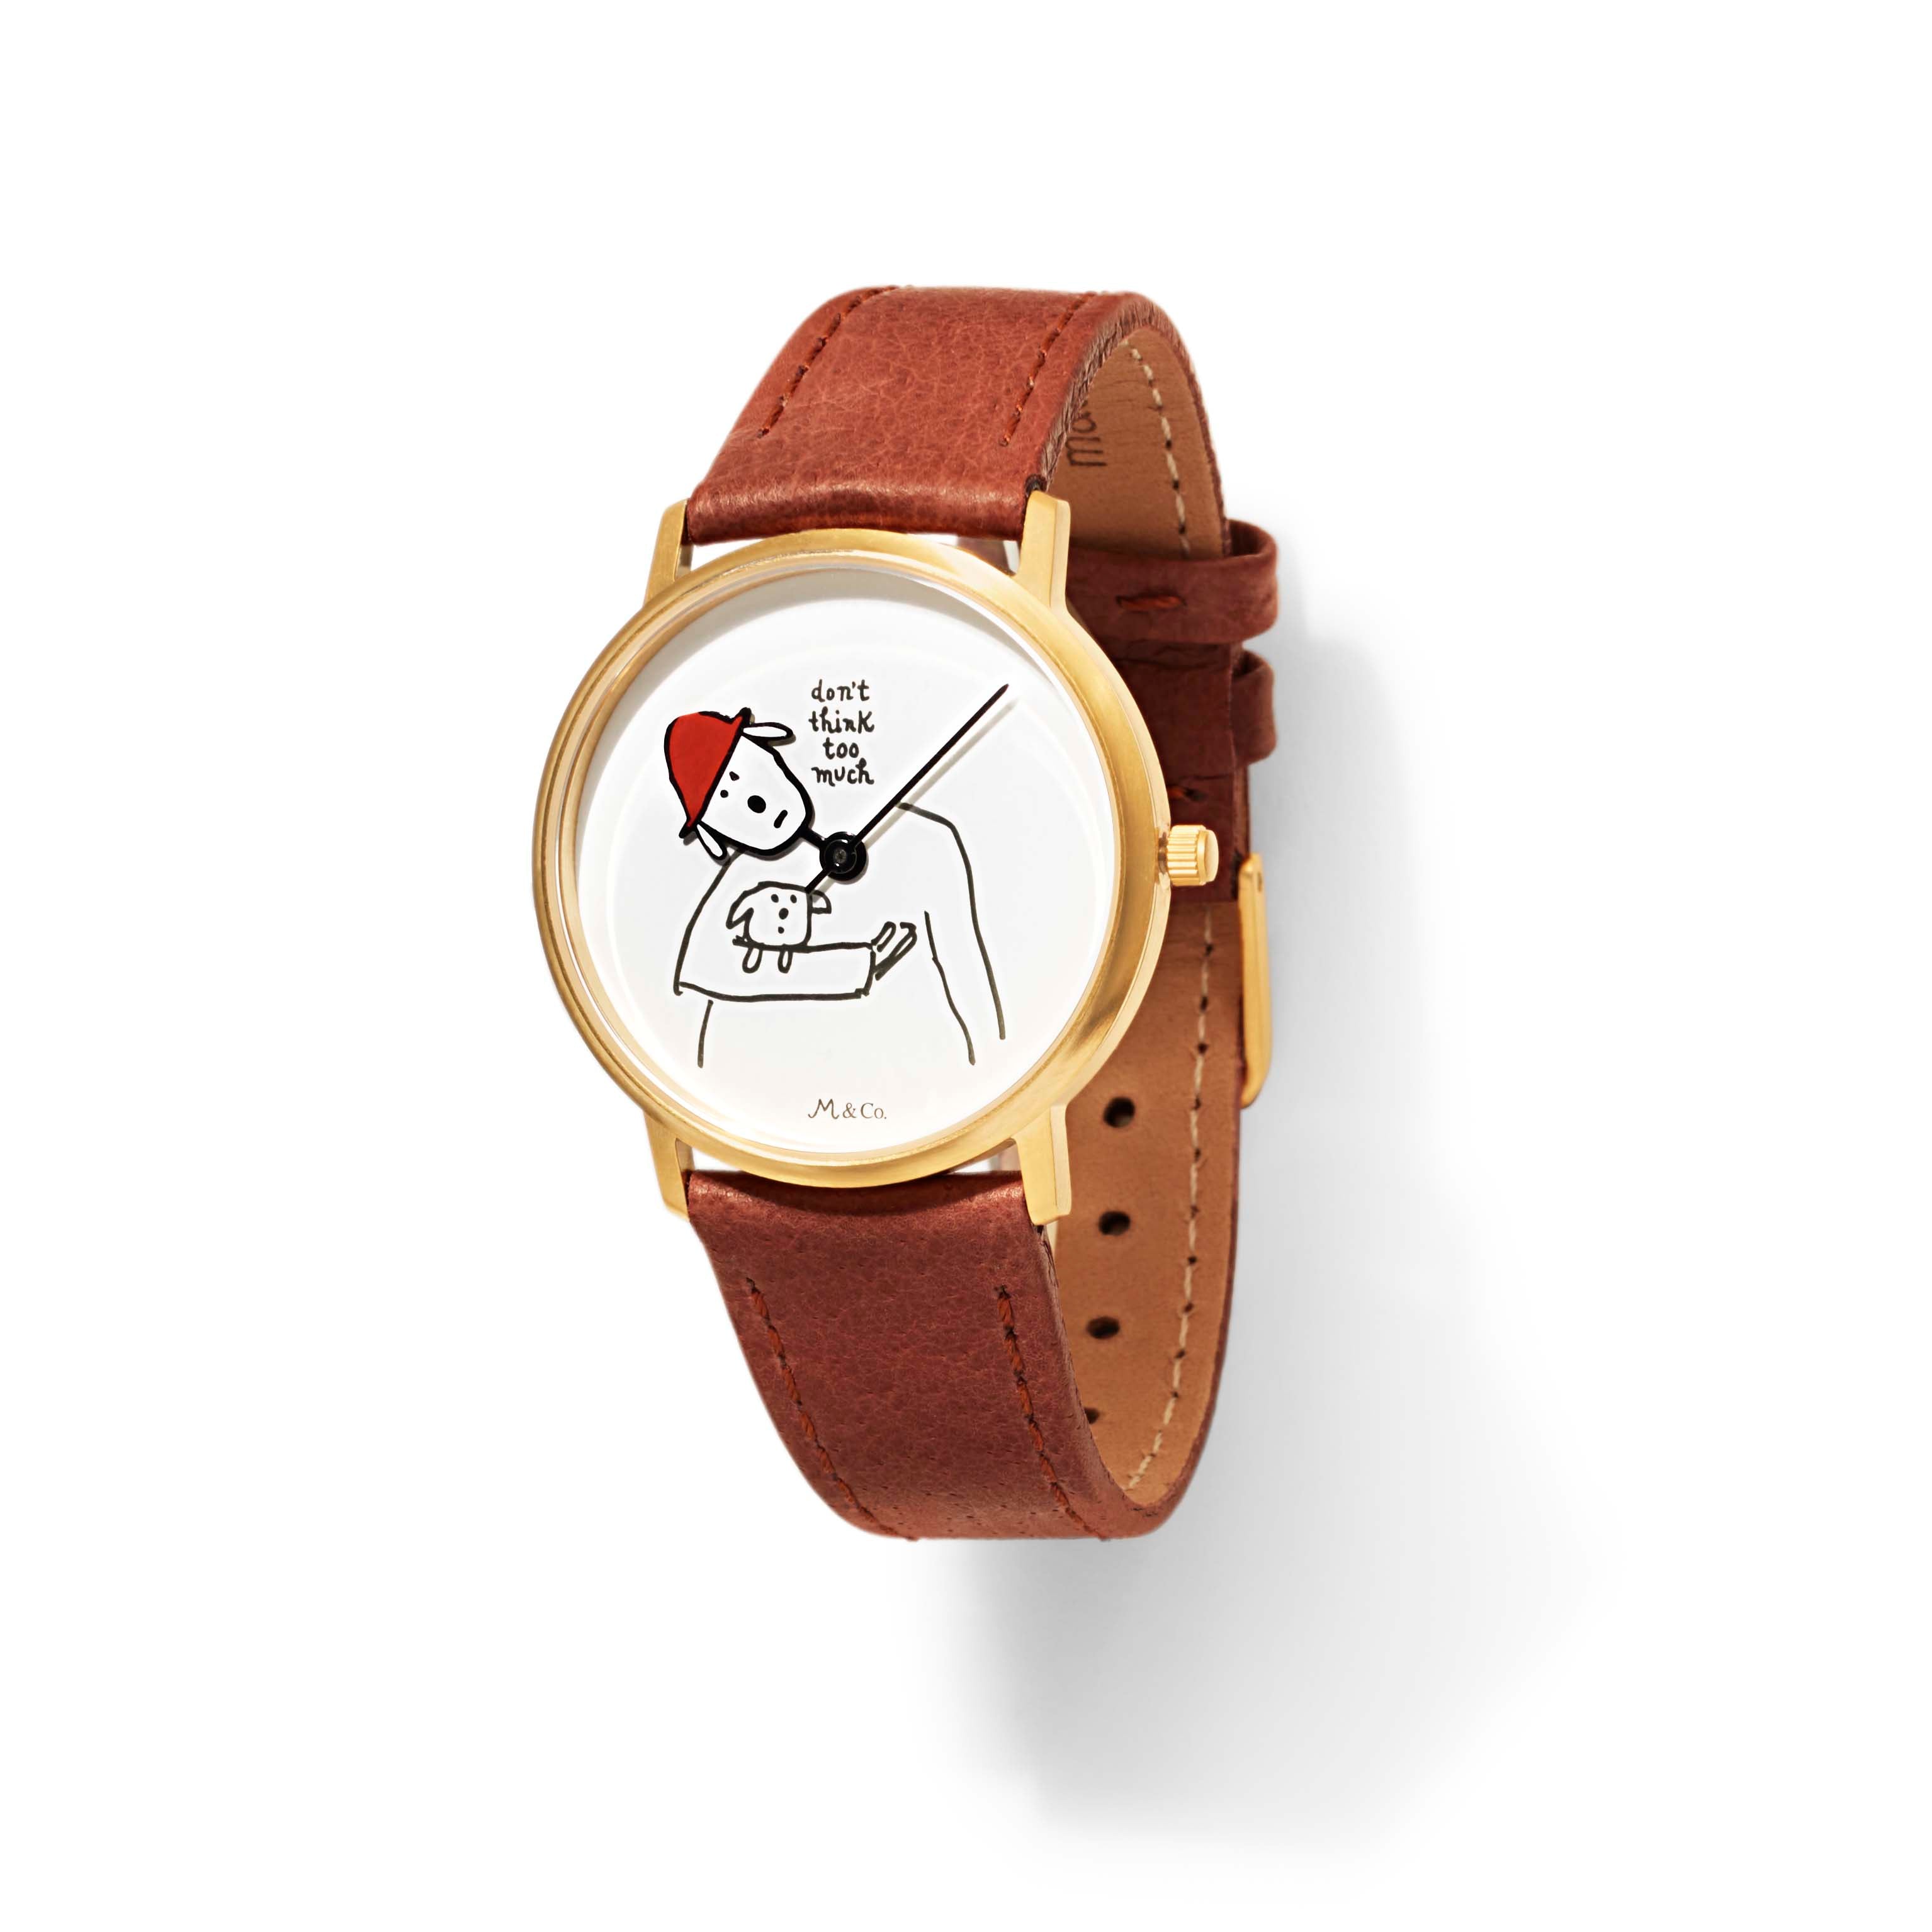 Casio World Time Watch – MoMA Design Store